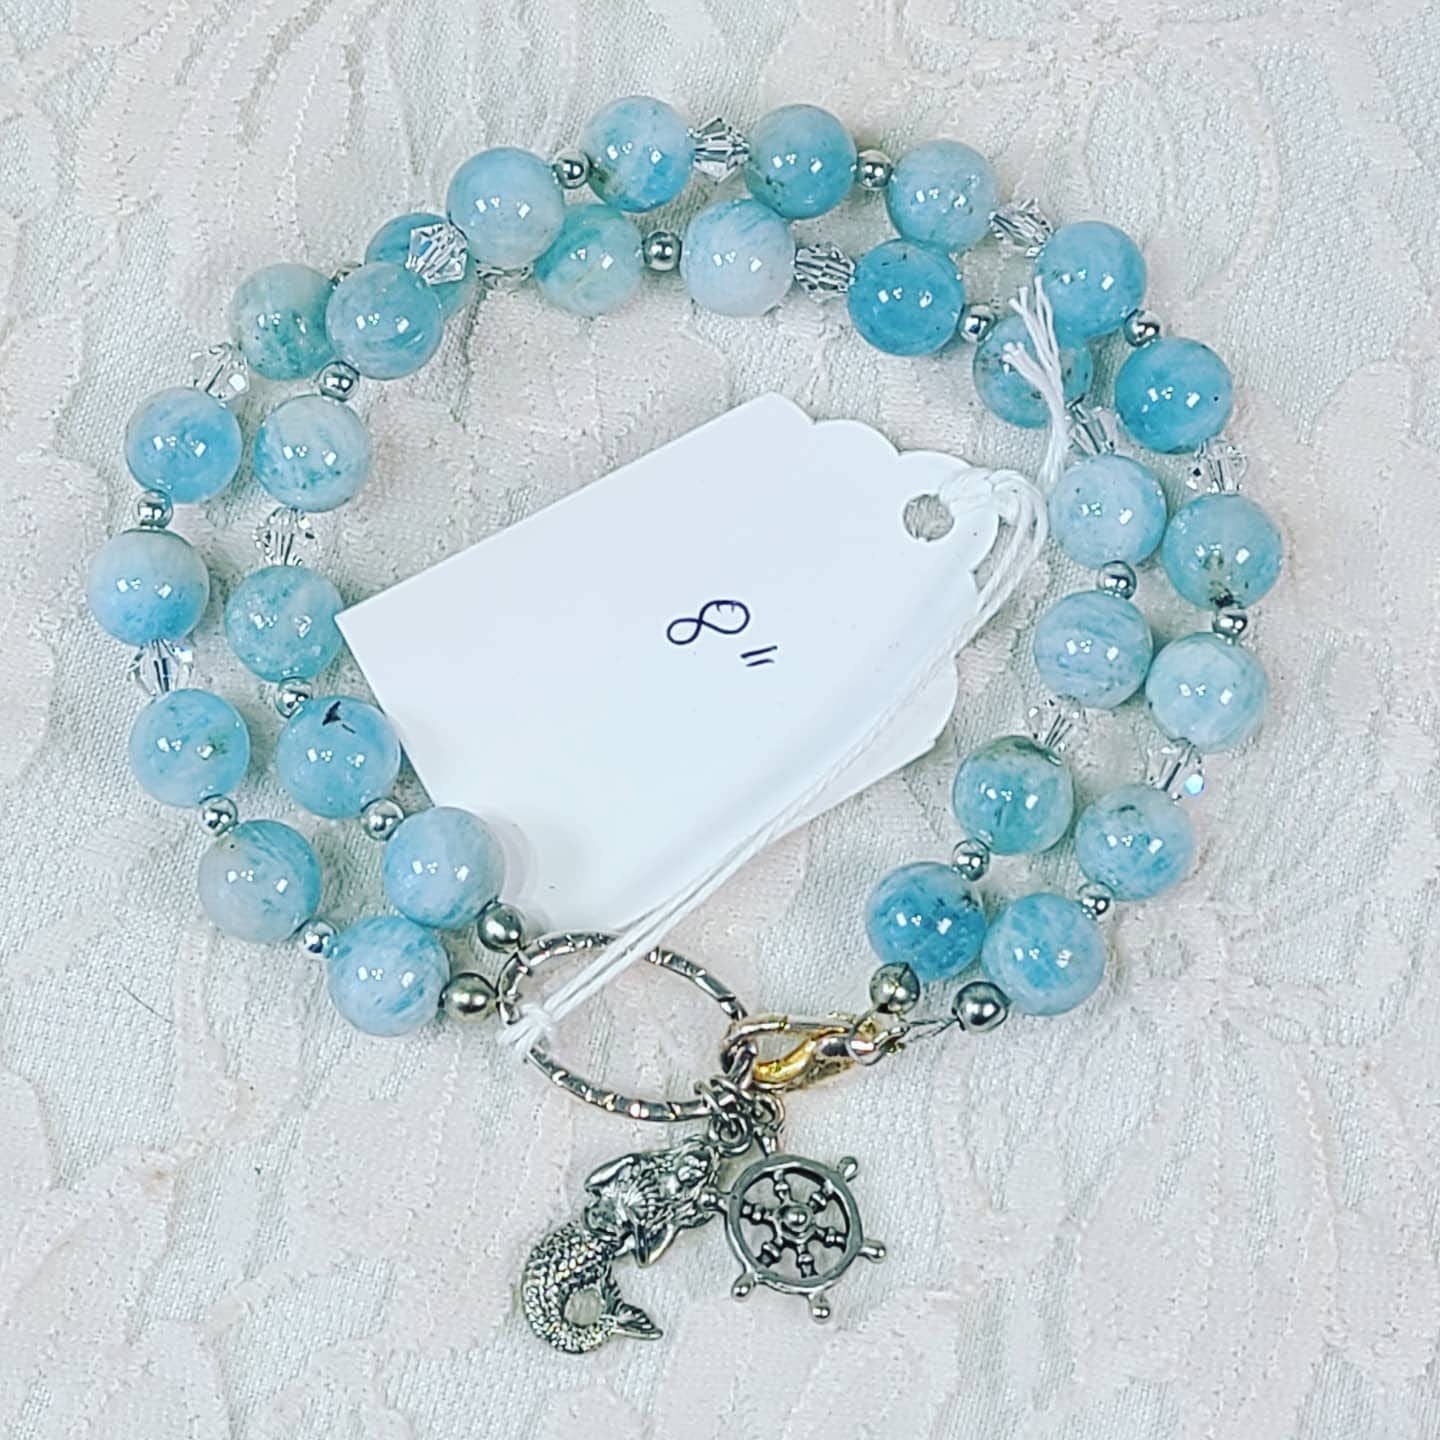 MERMAID Bracelet ~ Blue Aquamarine Round Beads and Swarovski Crystal Beads & Sterling Silver Bali Bead Accents